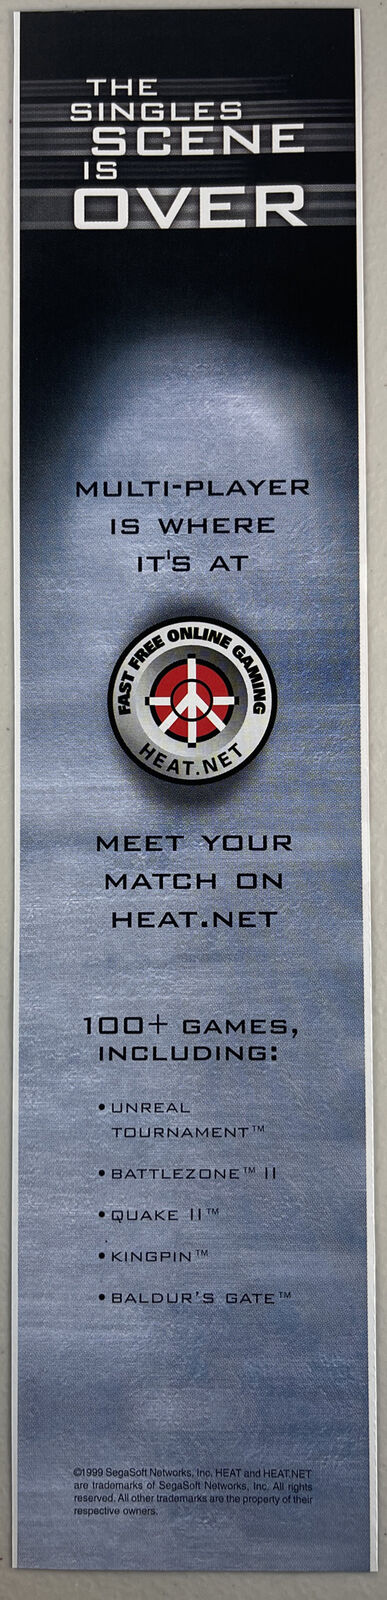 1999 Heat.net Online Gaming Ad Battlezone II Quake Kingpin Baldur’s Gate Sega